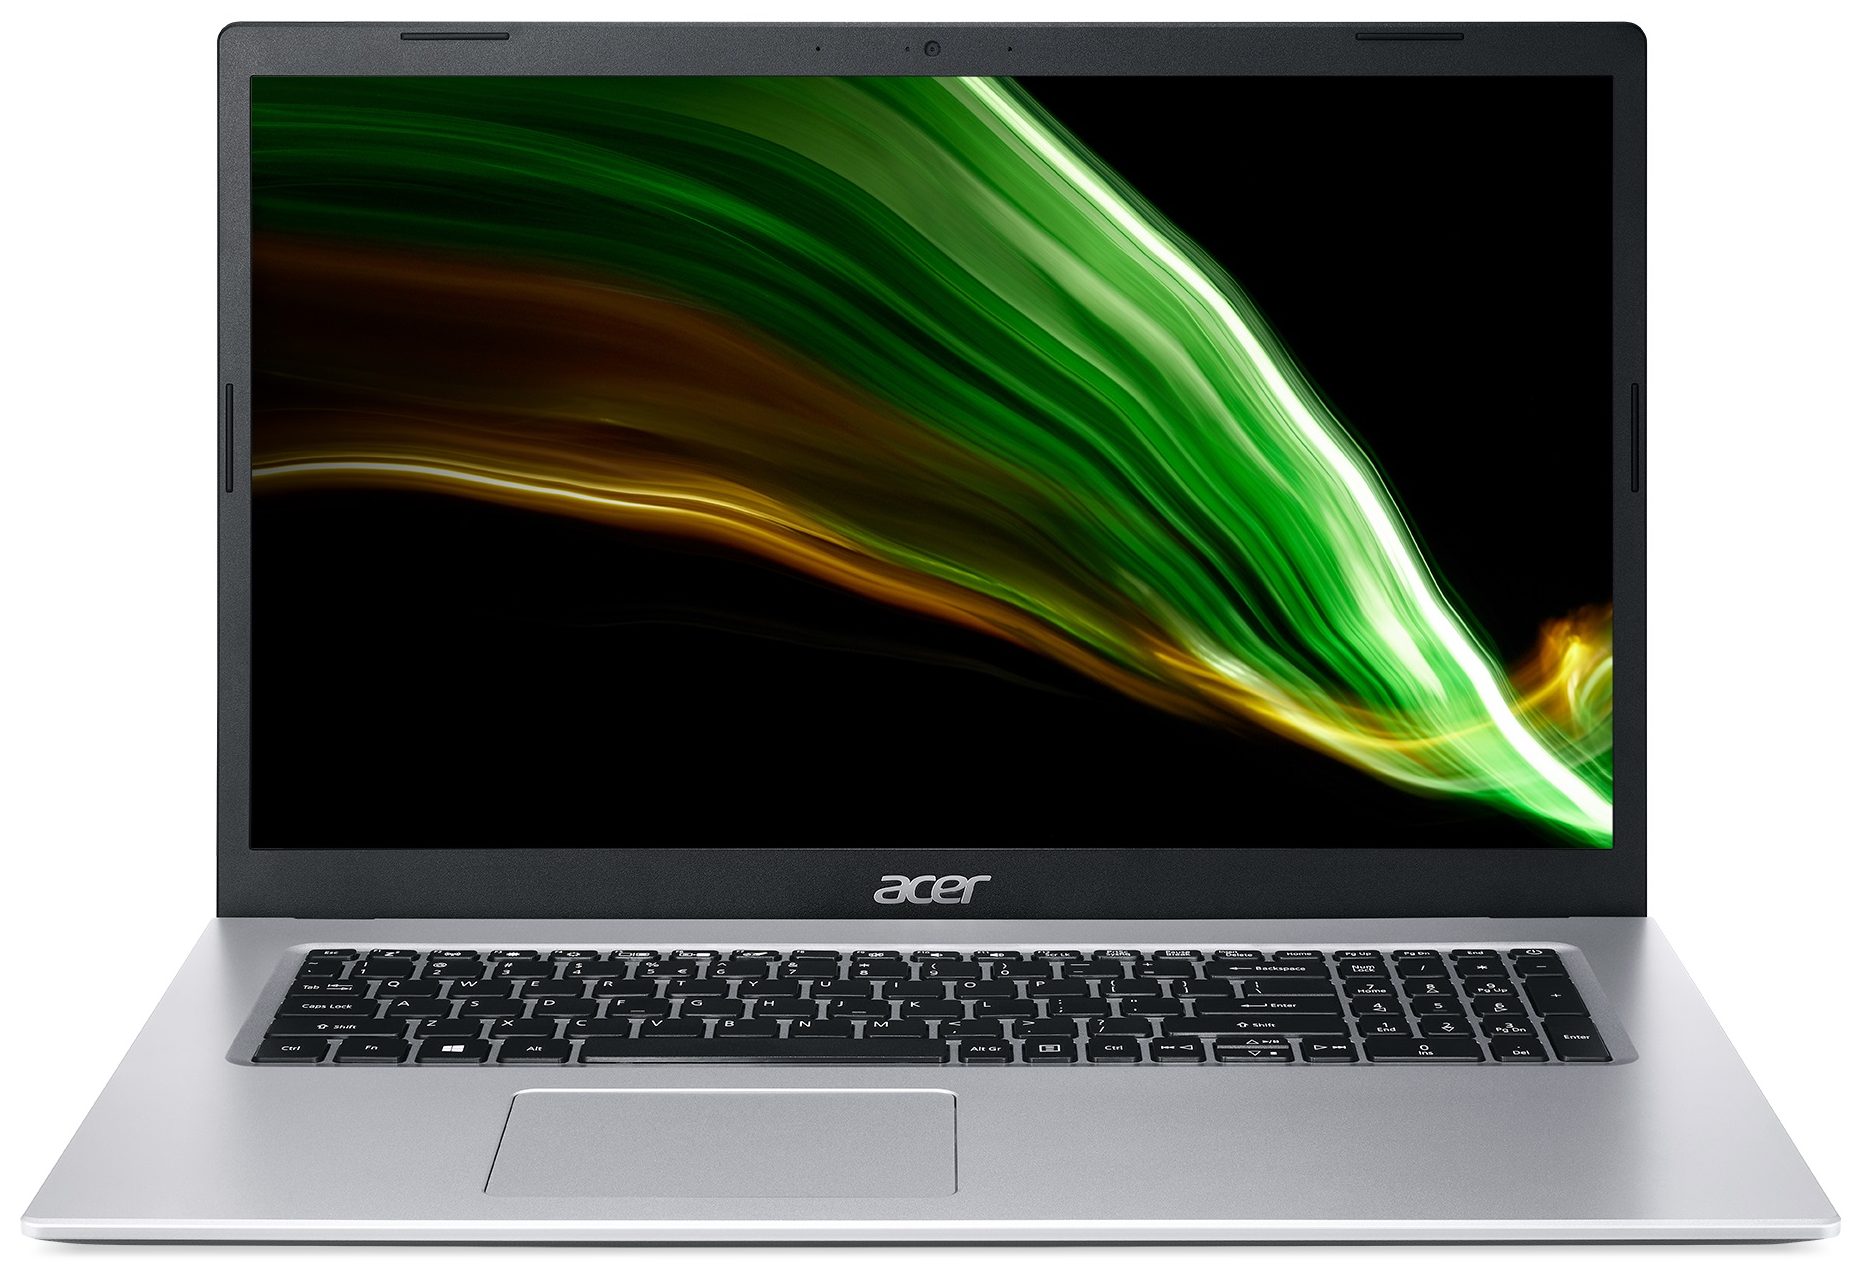 1080), · G4 Home Xe Acer IPS 17.3”, · 3 DDR4 · 11 · 2x - 4GB 256GB UHD Full SSD · HD Aspire Windows (1920 i3-1115G4 Graphics x